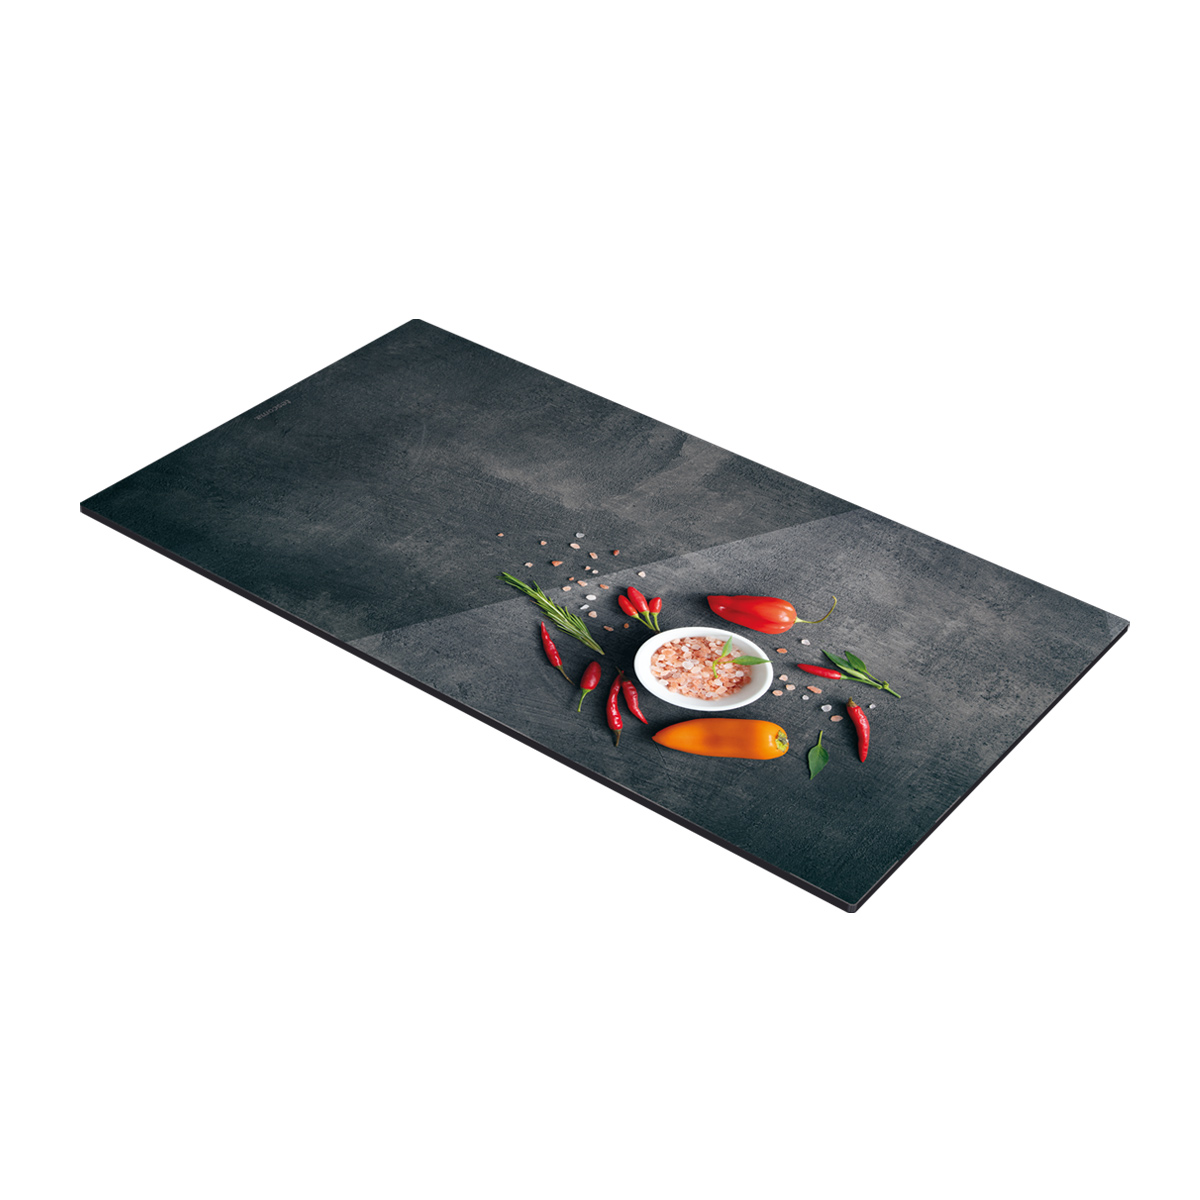 Szklana płyta ochronna na kuchenkę ONLINE 30 x 52 cm, sól i chilli